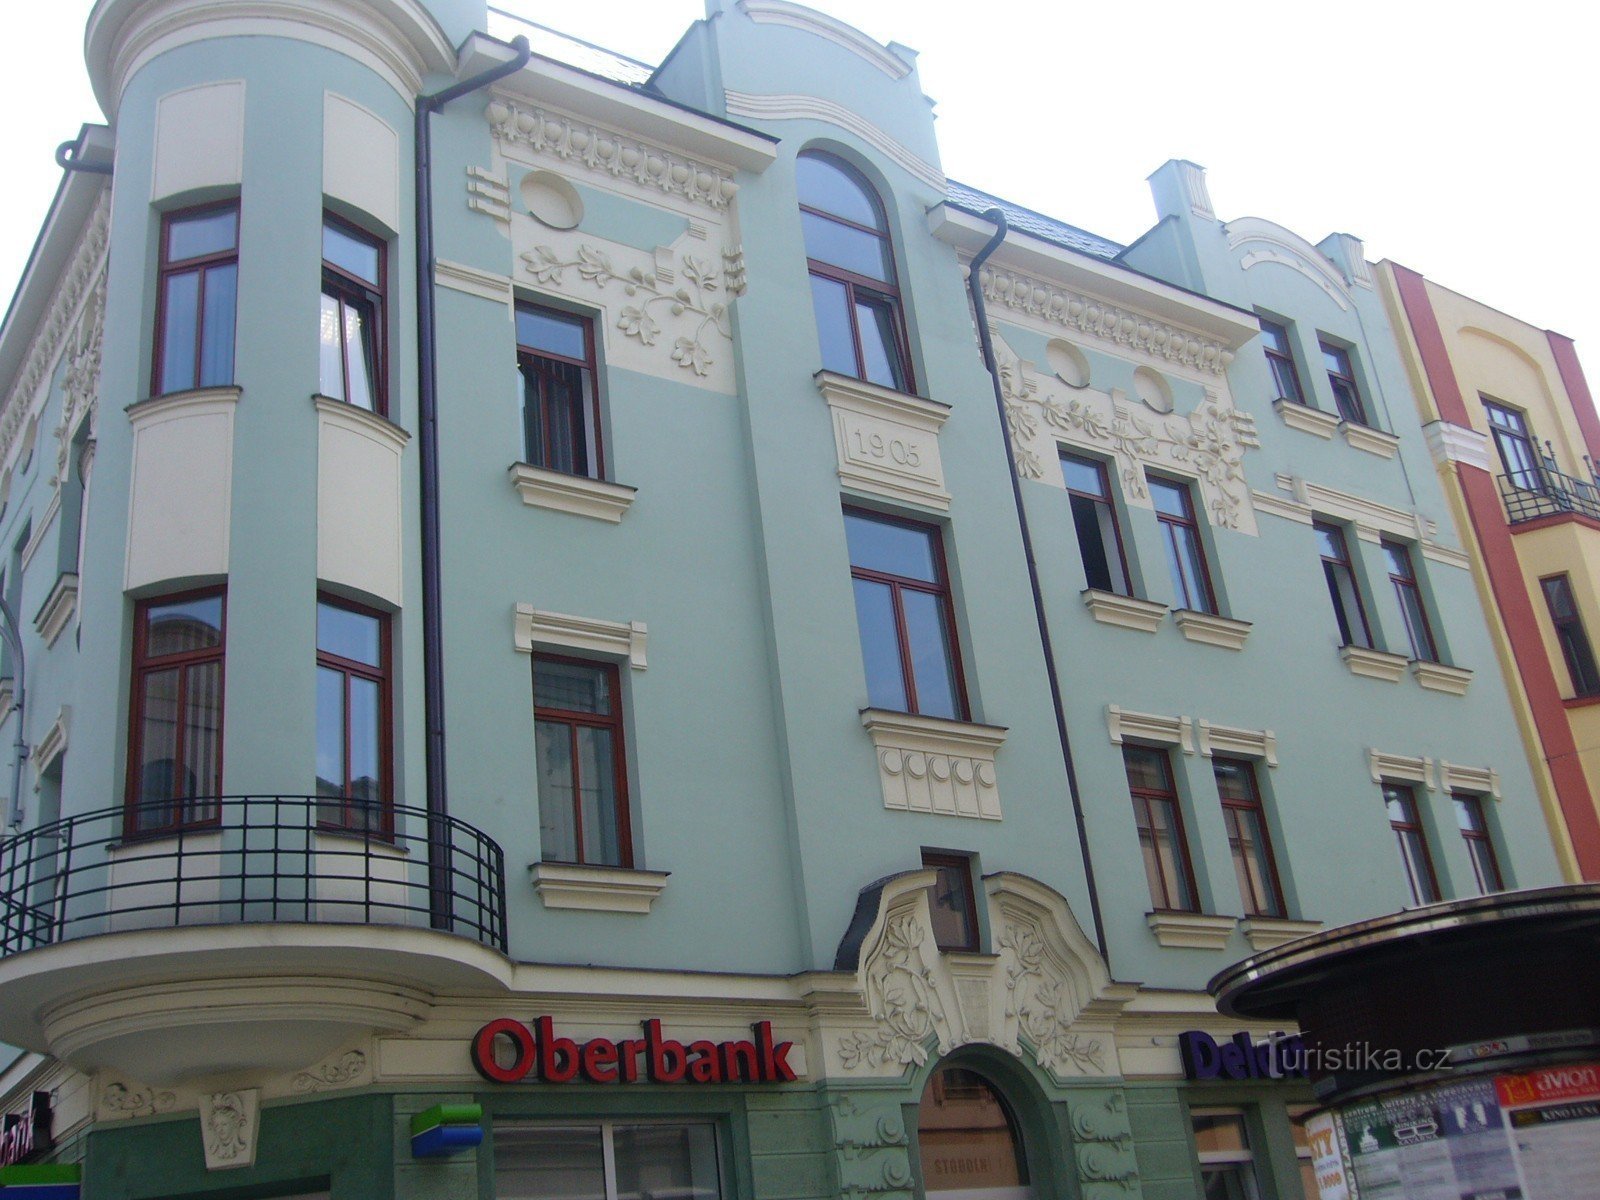 Casa Art Nouveau na esquina das ruas Nádražní e Stodolní